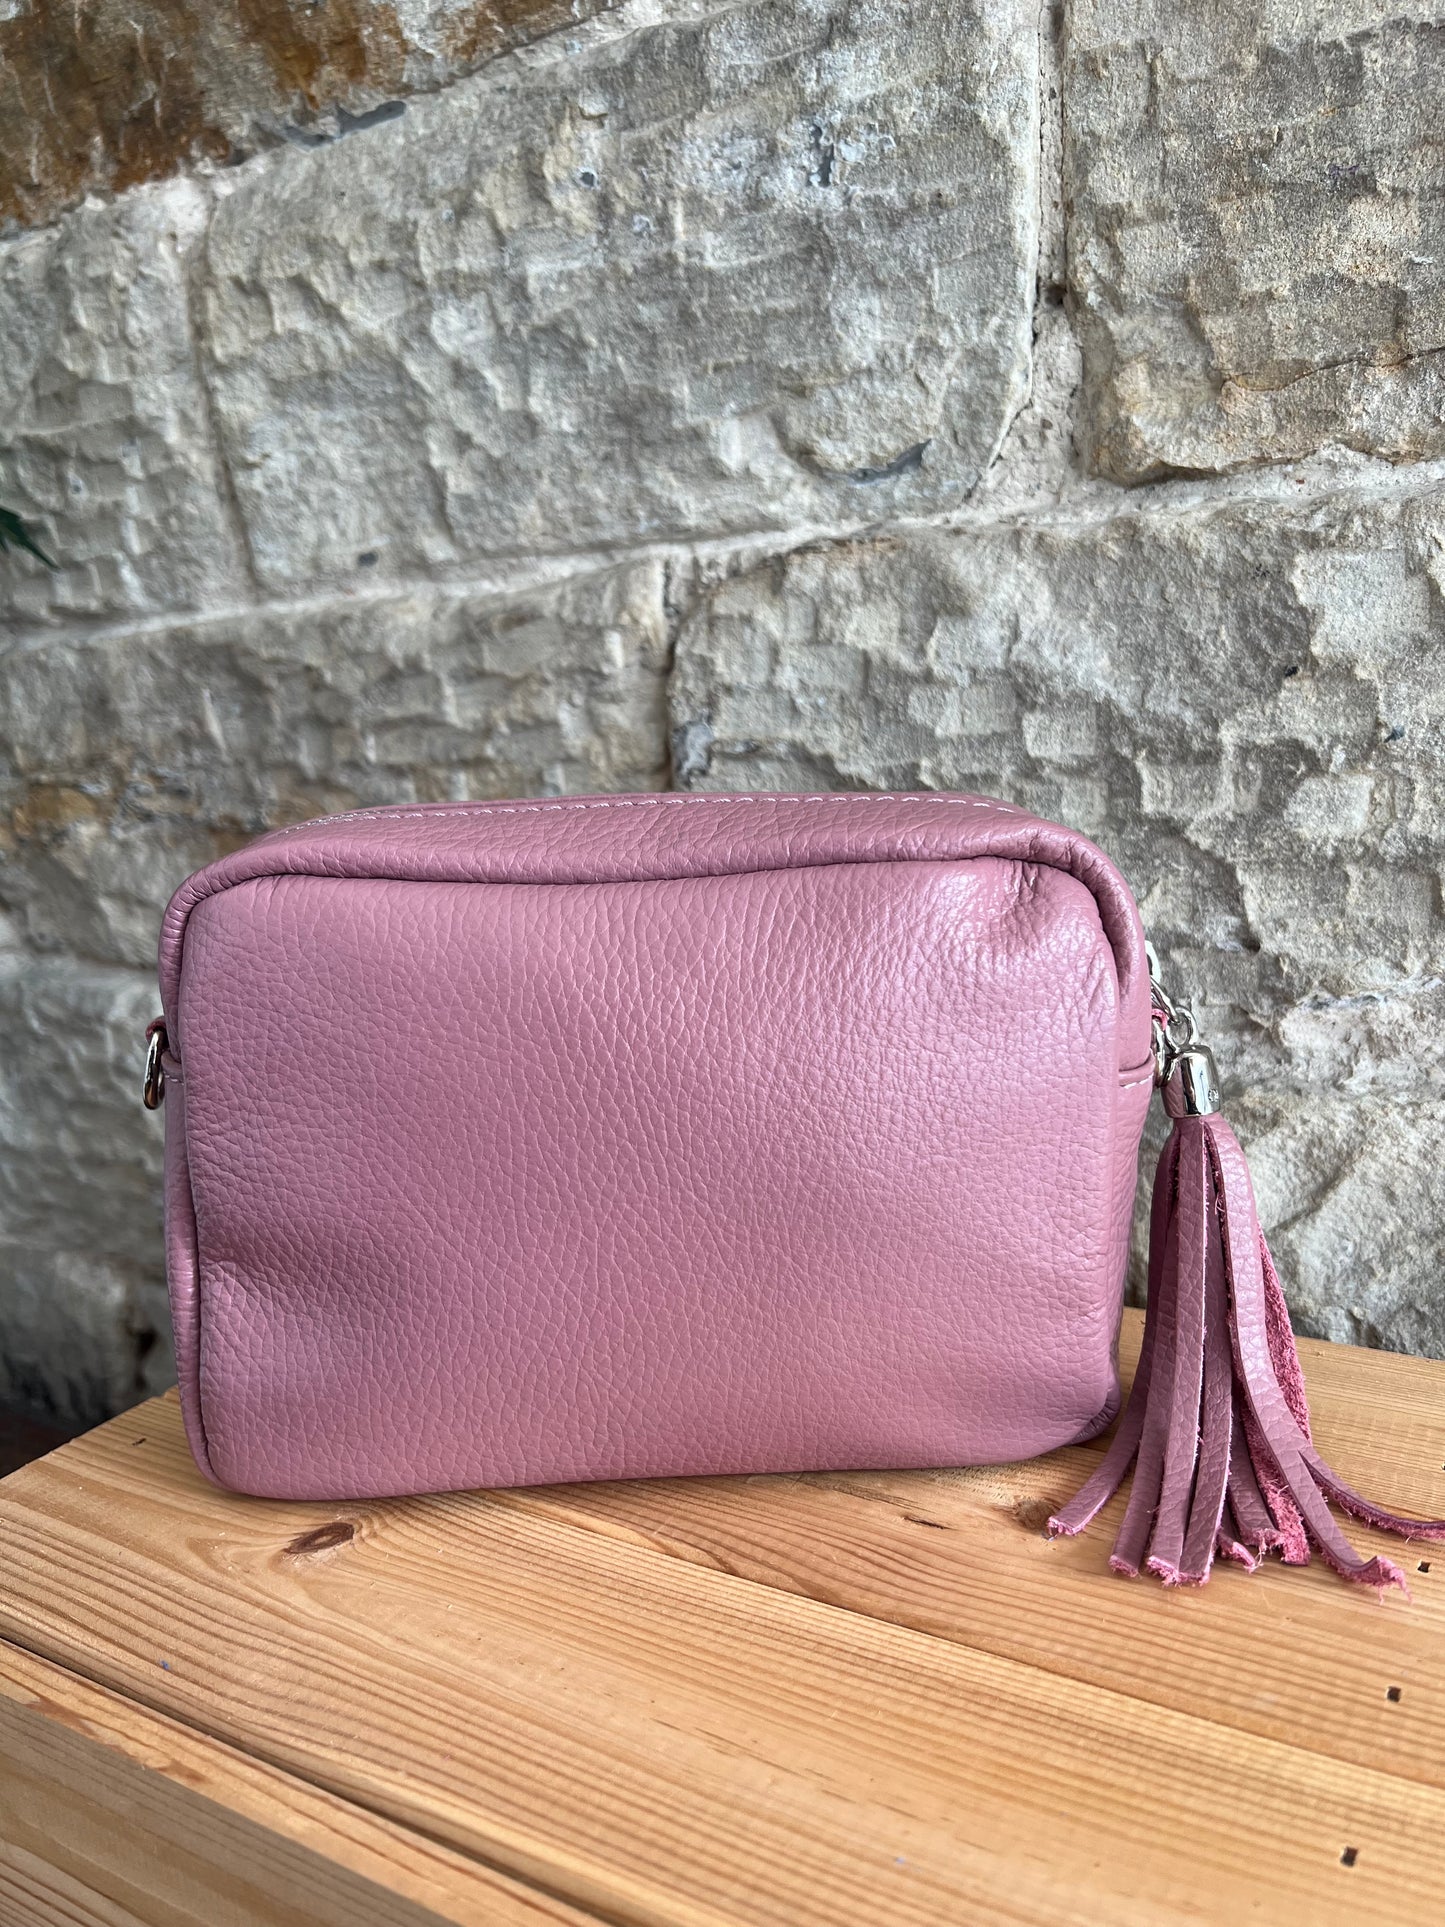 NIKKI - Leather Cross Body 'Camera' Bag with Tassels - Dusky Pink